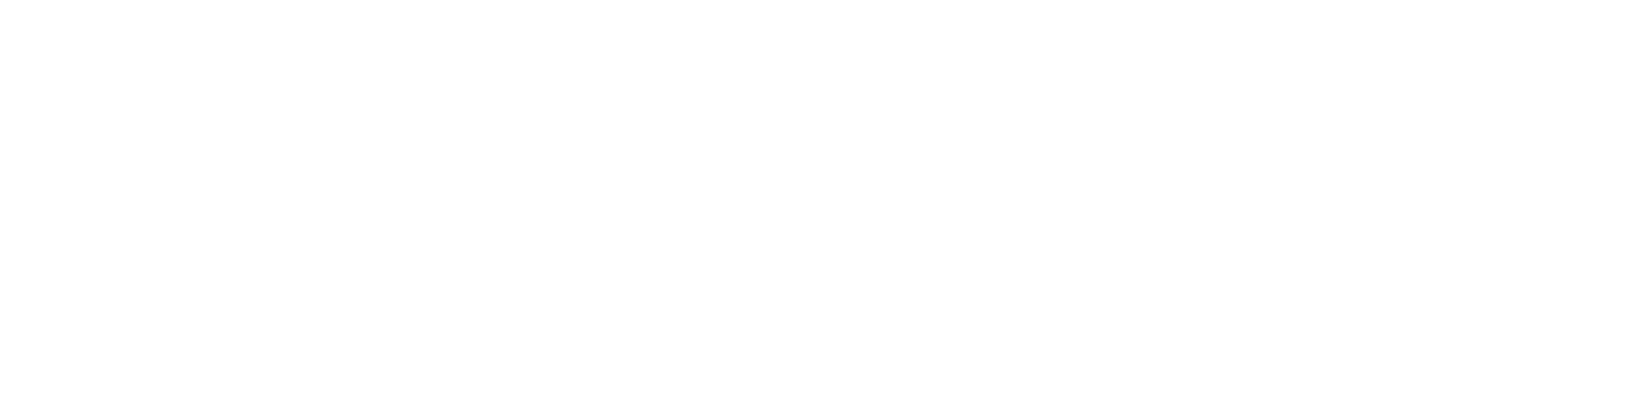 4youthvoice.org